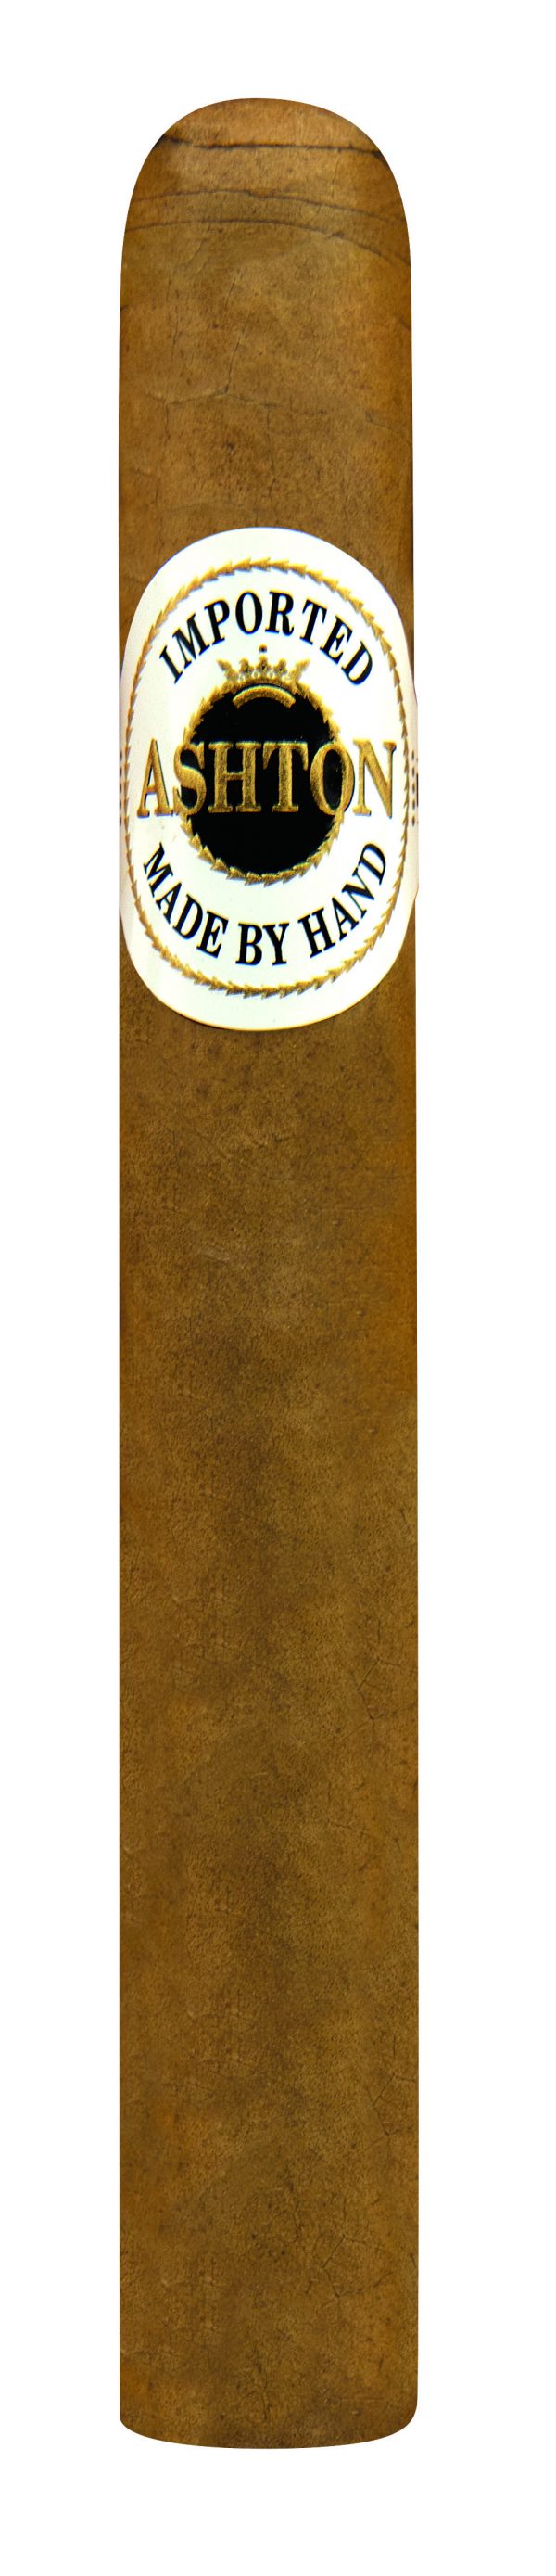 Single Ashton Corona cigar